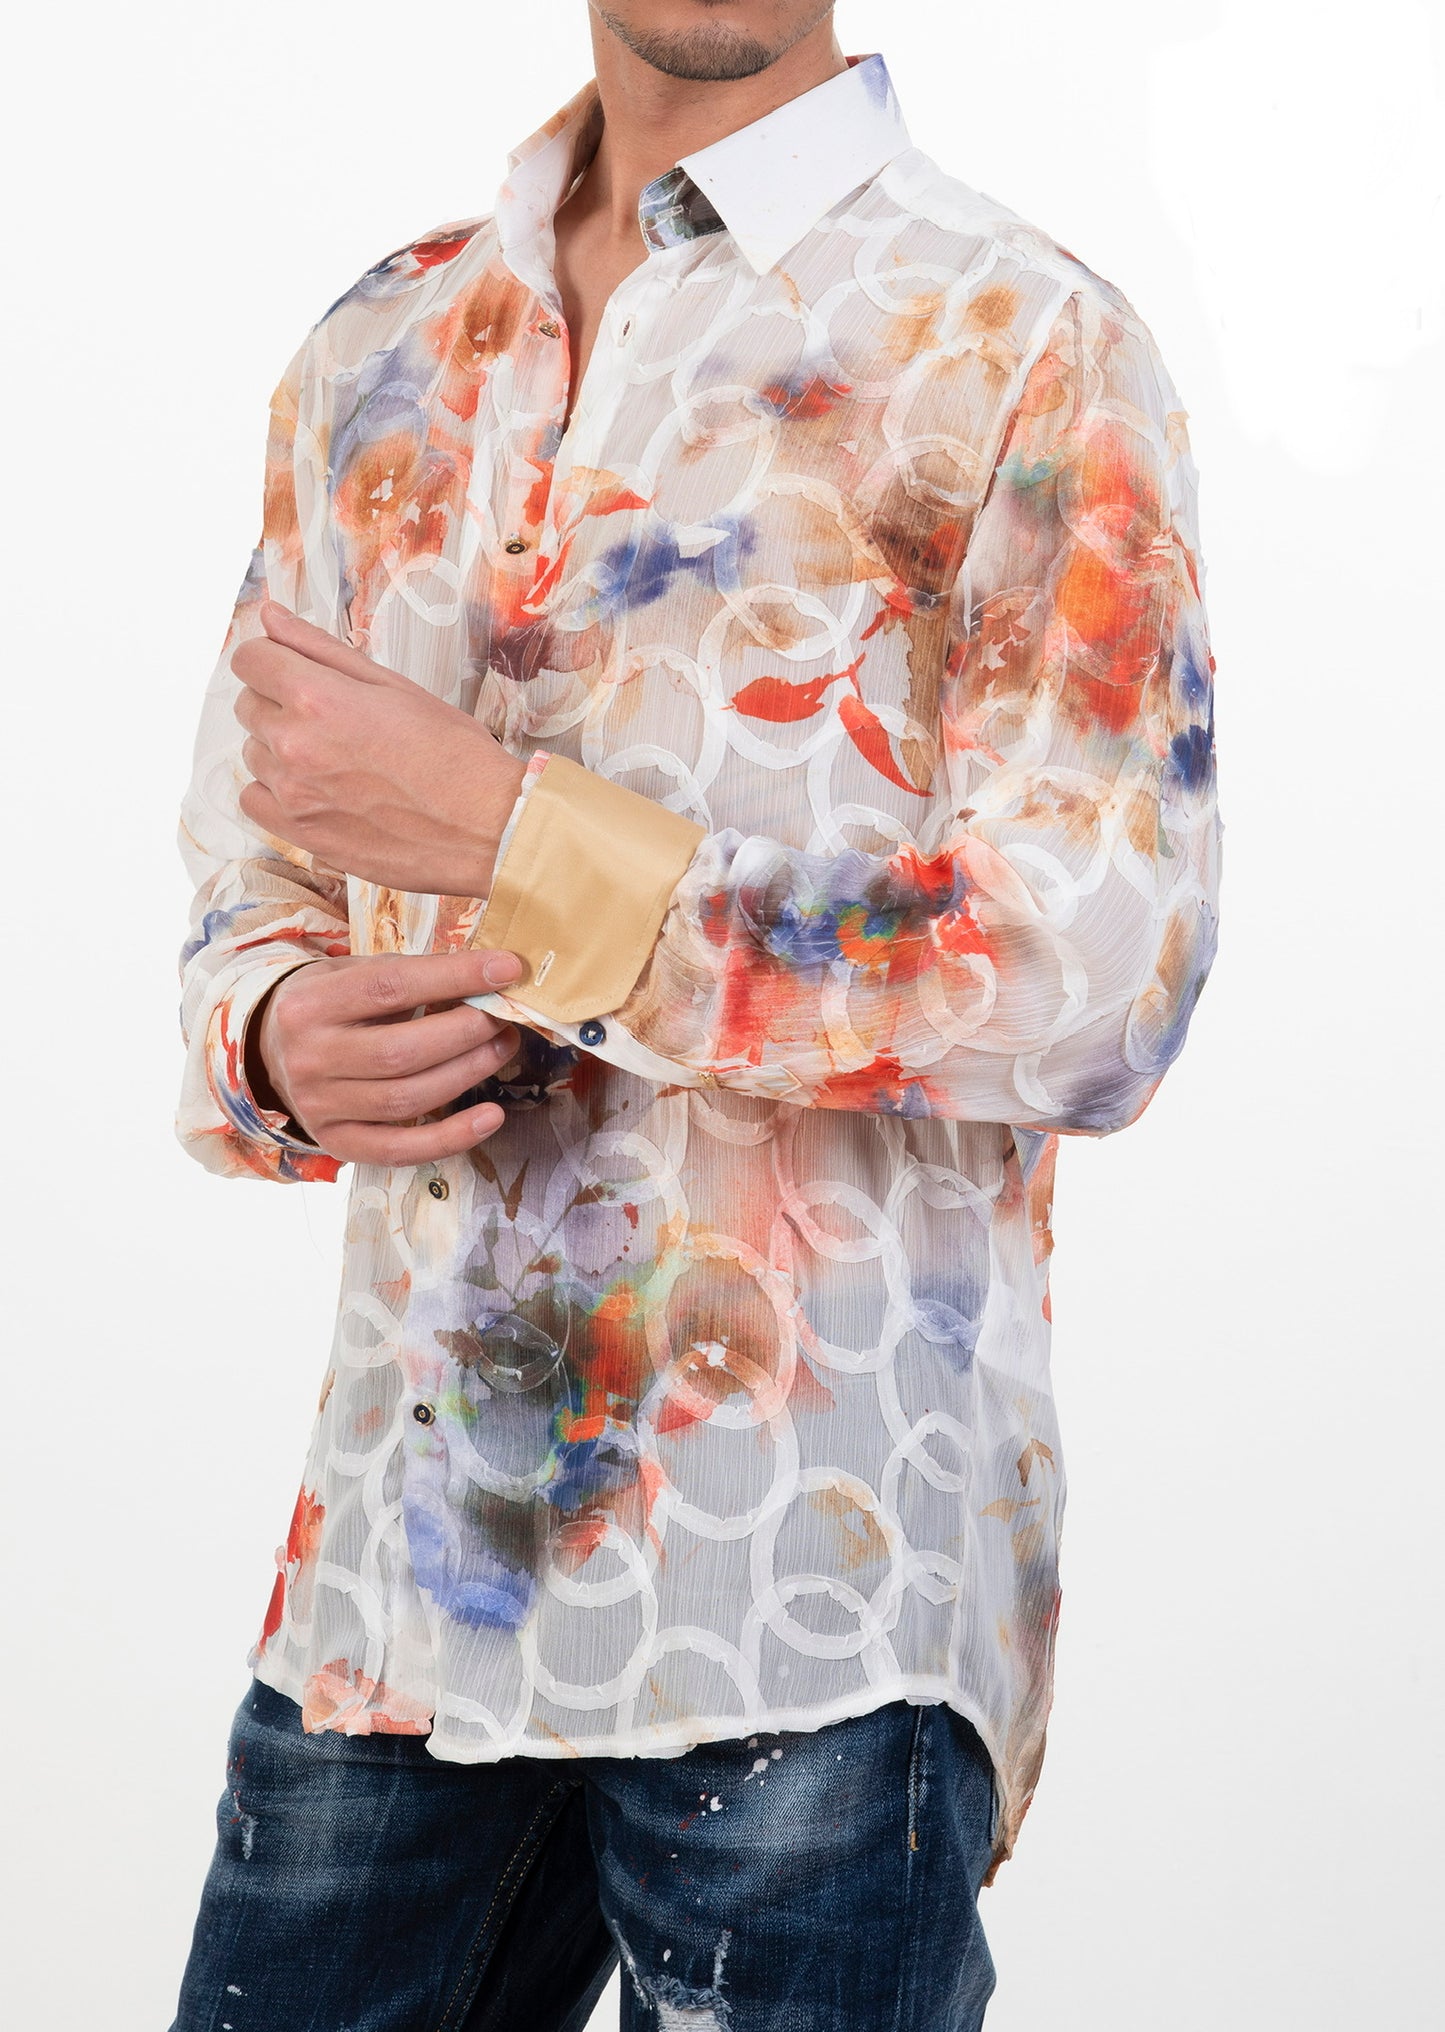 White circle shirt with orange and blue trim SHIRTS Mondo Collection Vercini